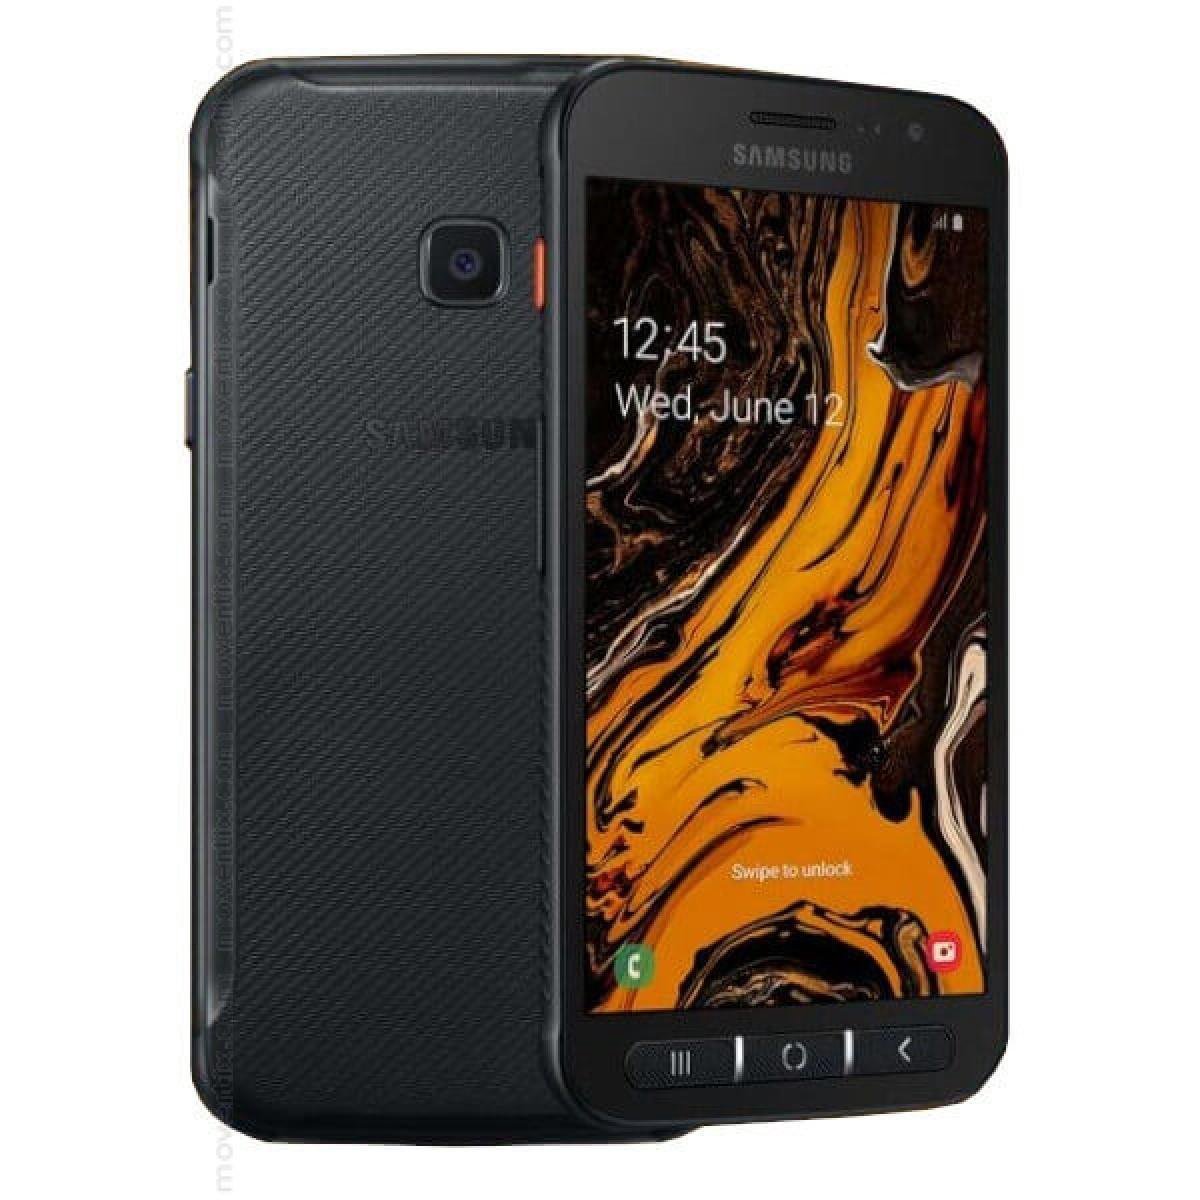 nationalisme honderd Aanbevolen Samsung Galaxy Xcover 4s - 32GB - Zwart | bol.com